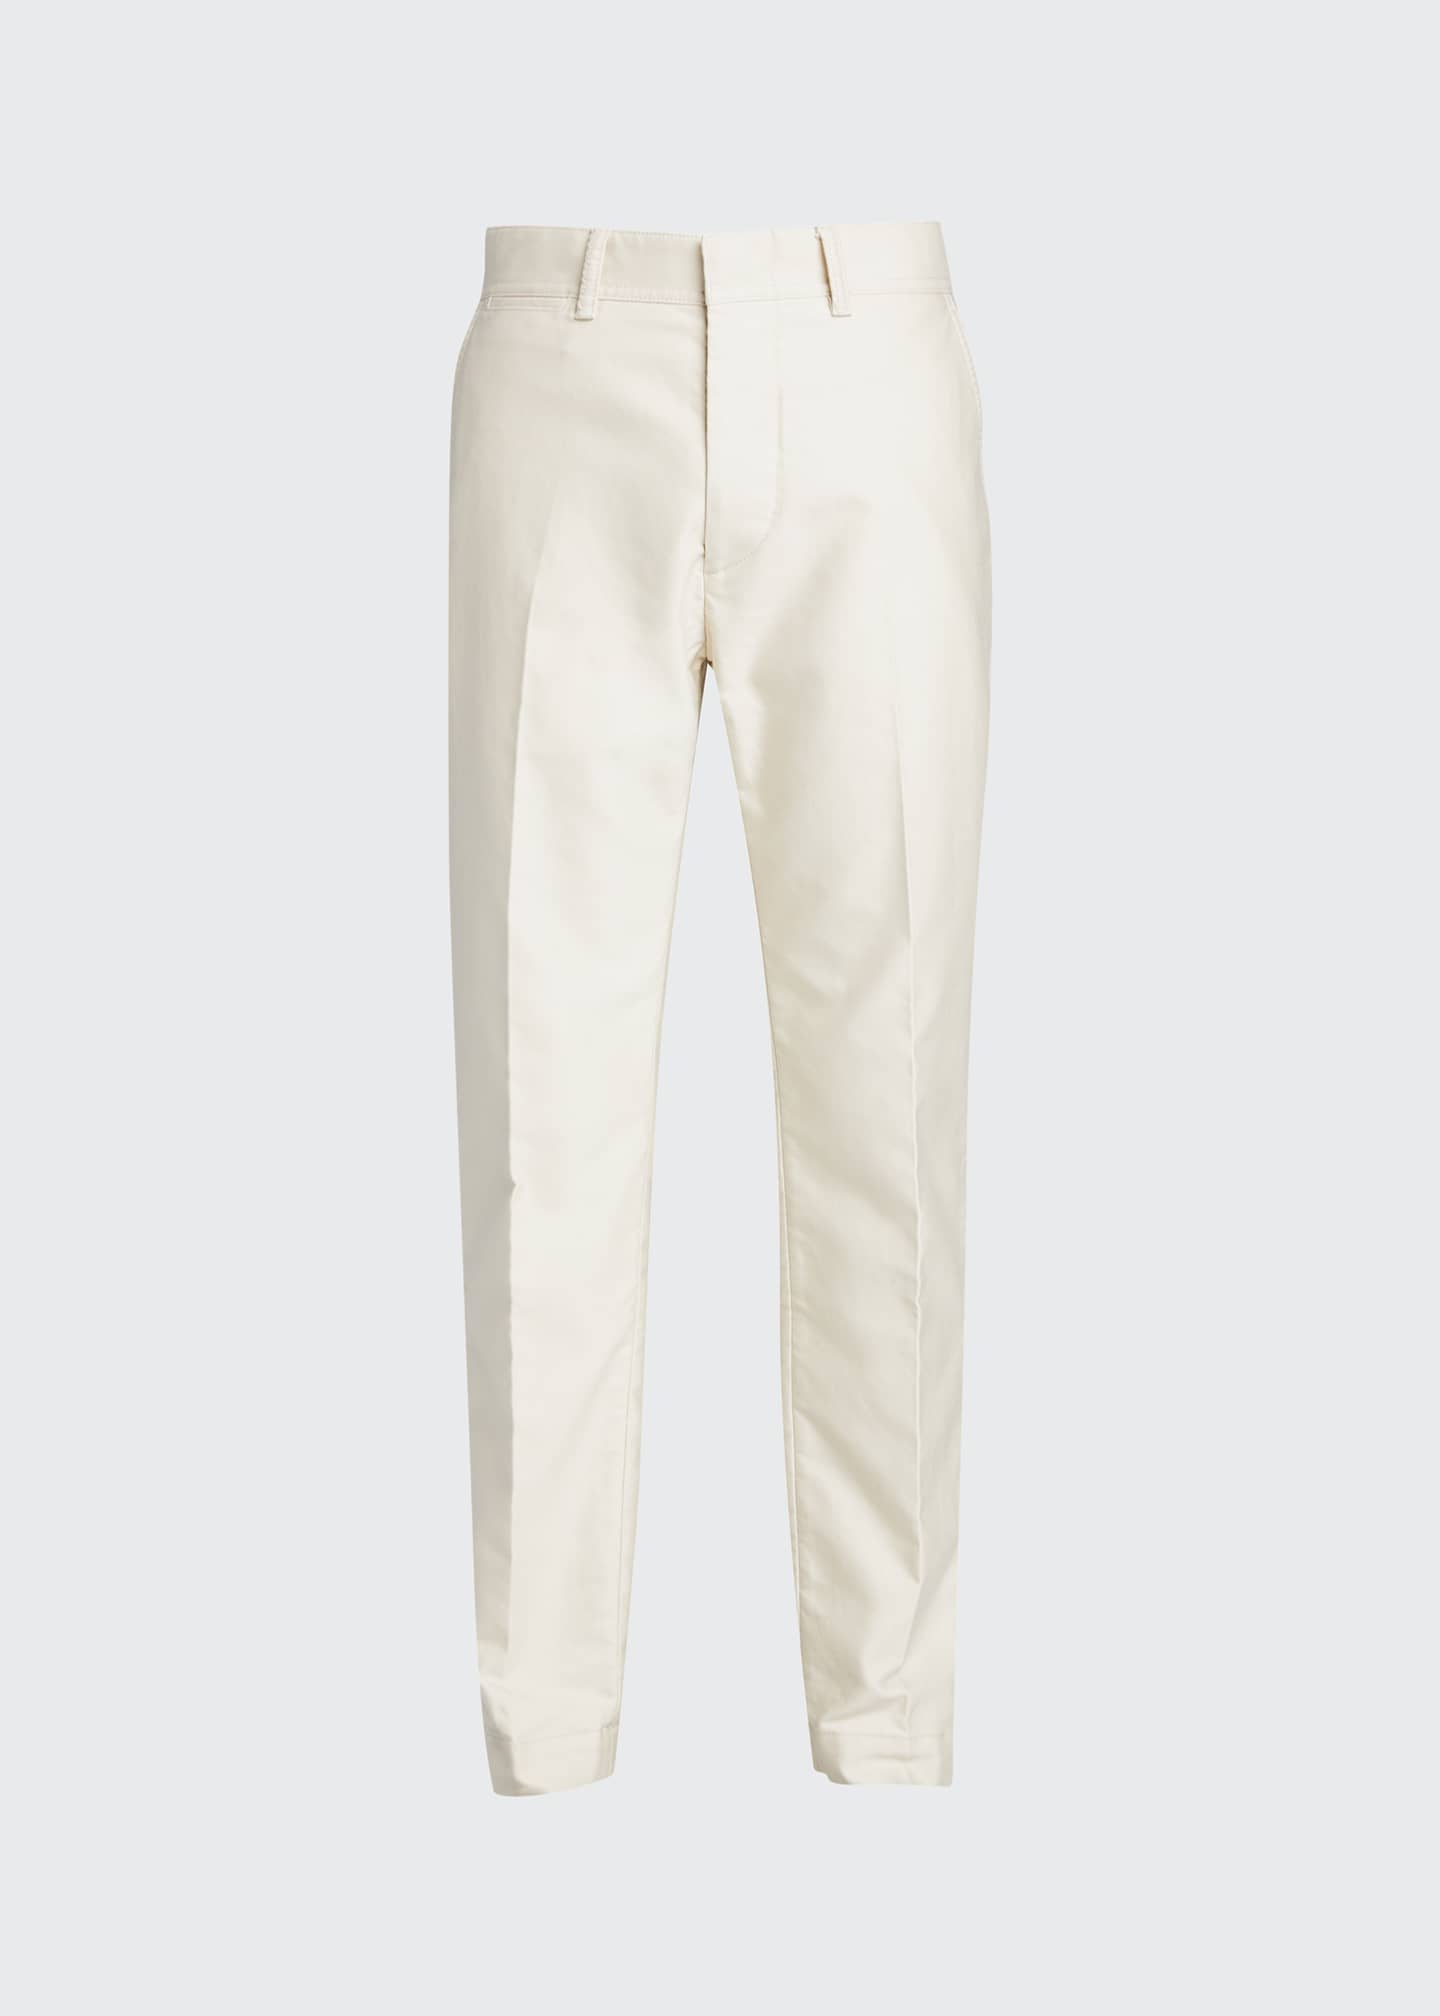 TOM FORD Men's Compact Garment-Washed Chino Sport Pants - Bergdorf Goodman